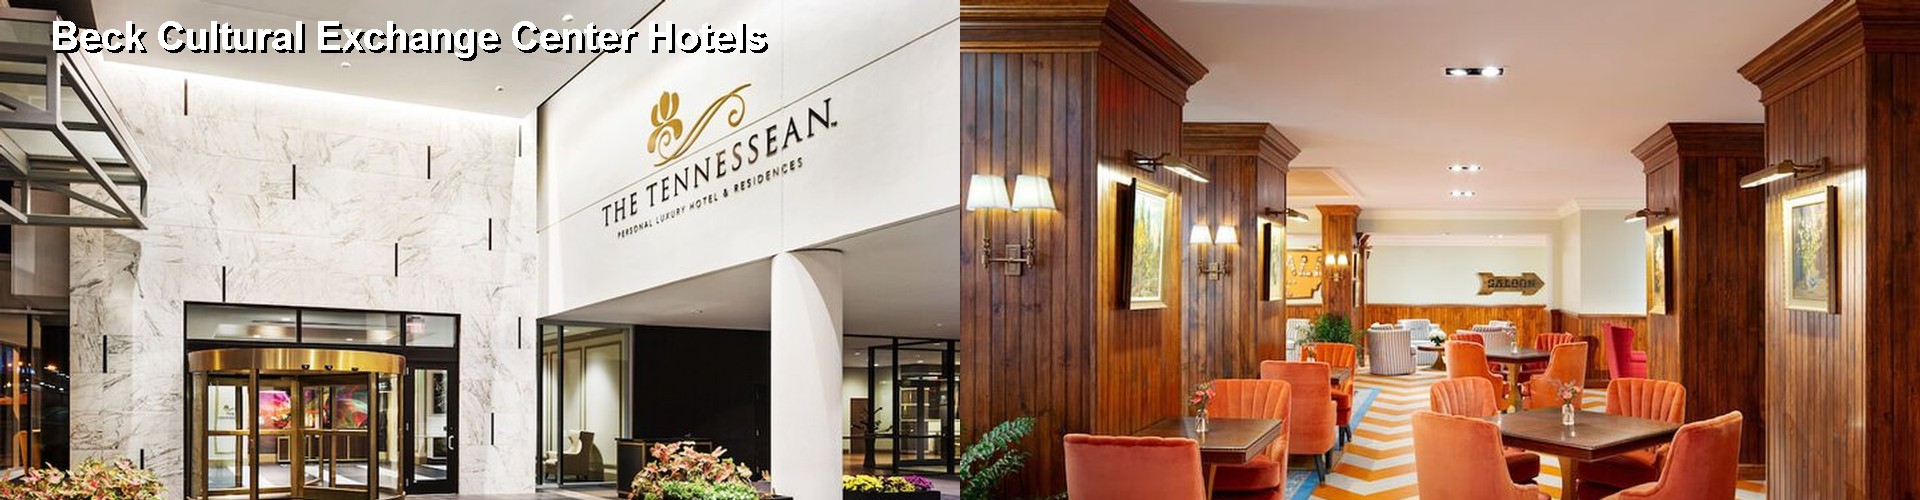 5 Best Hotels near Beck Cultural Exchange Center